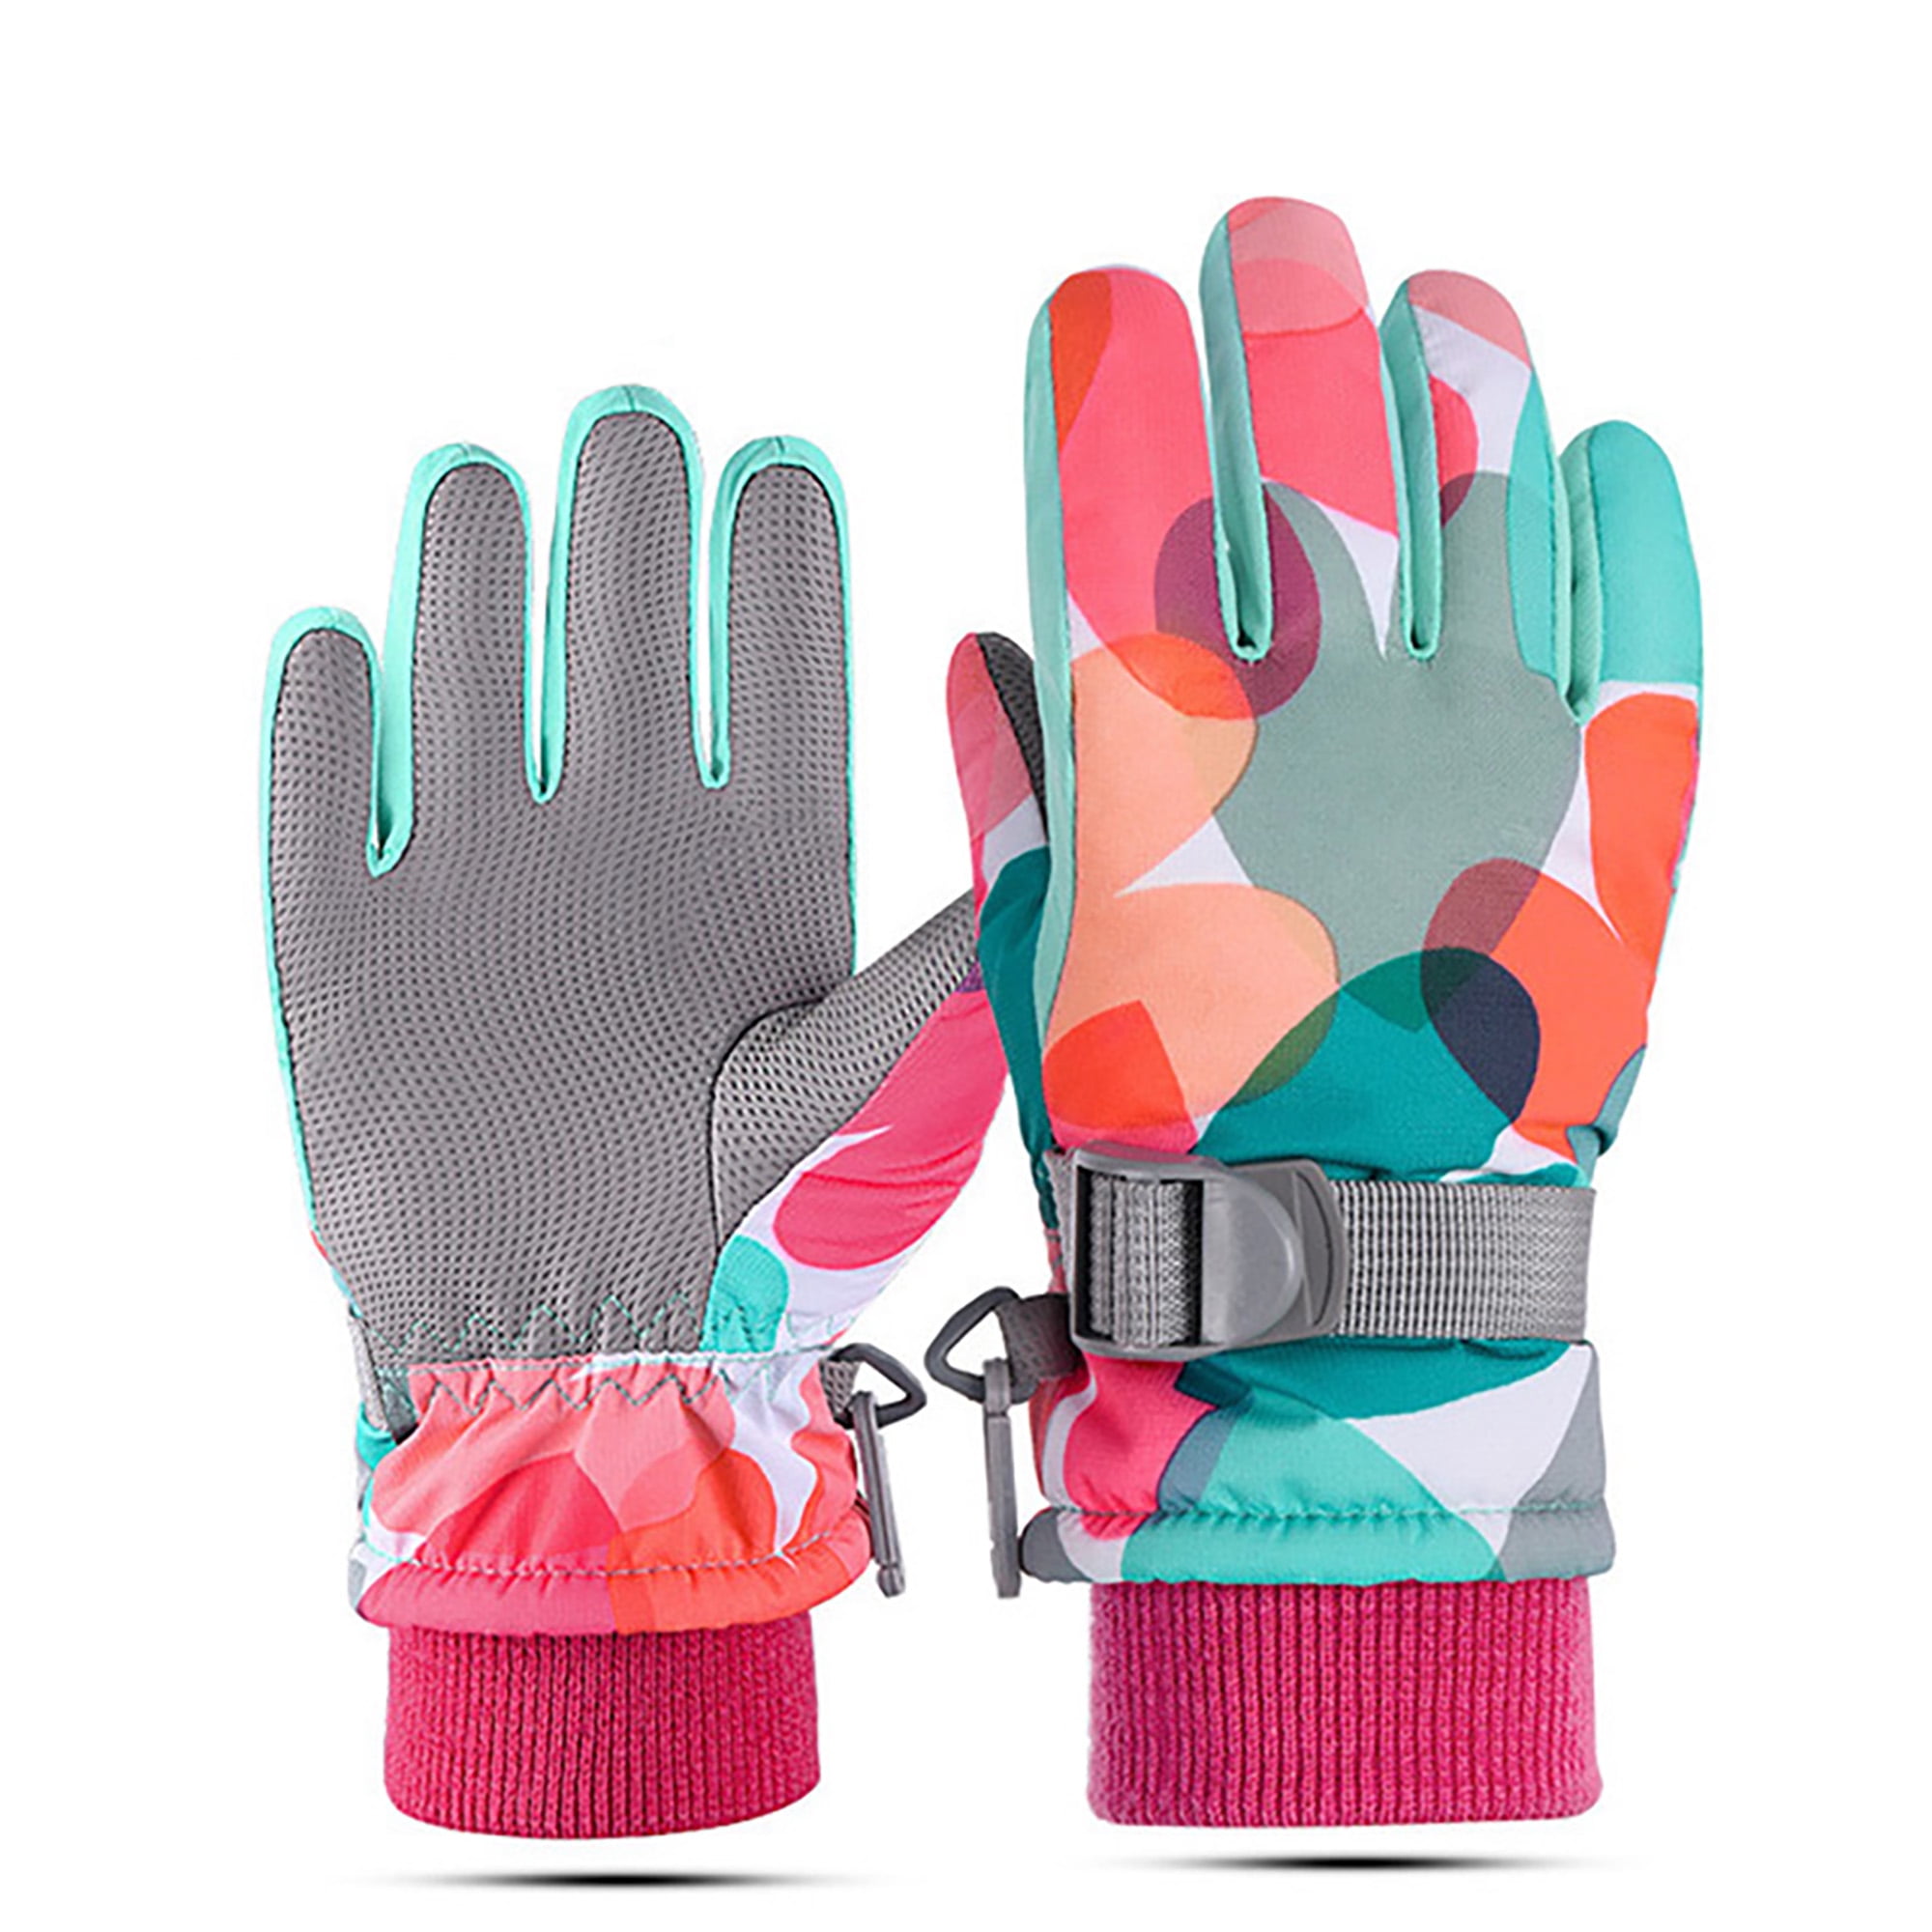 Kids Boy Girls Winter Snowproof Waterproof Snow Ski Gloves Mittens Thermal Warm